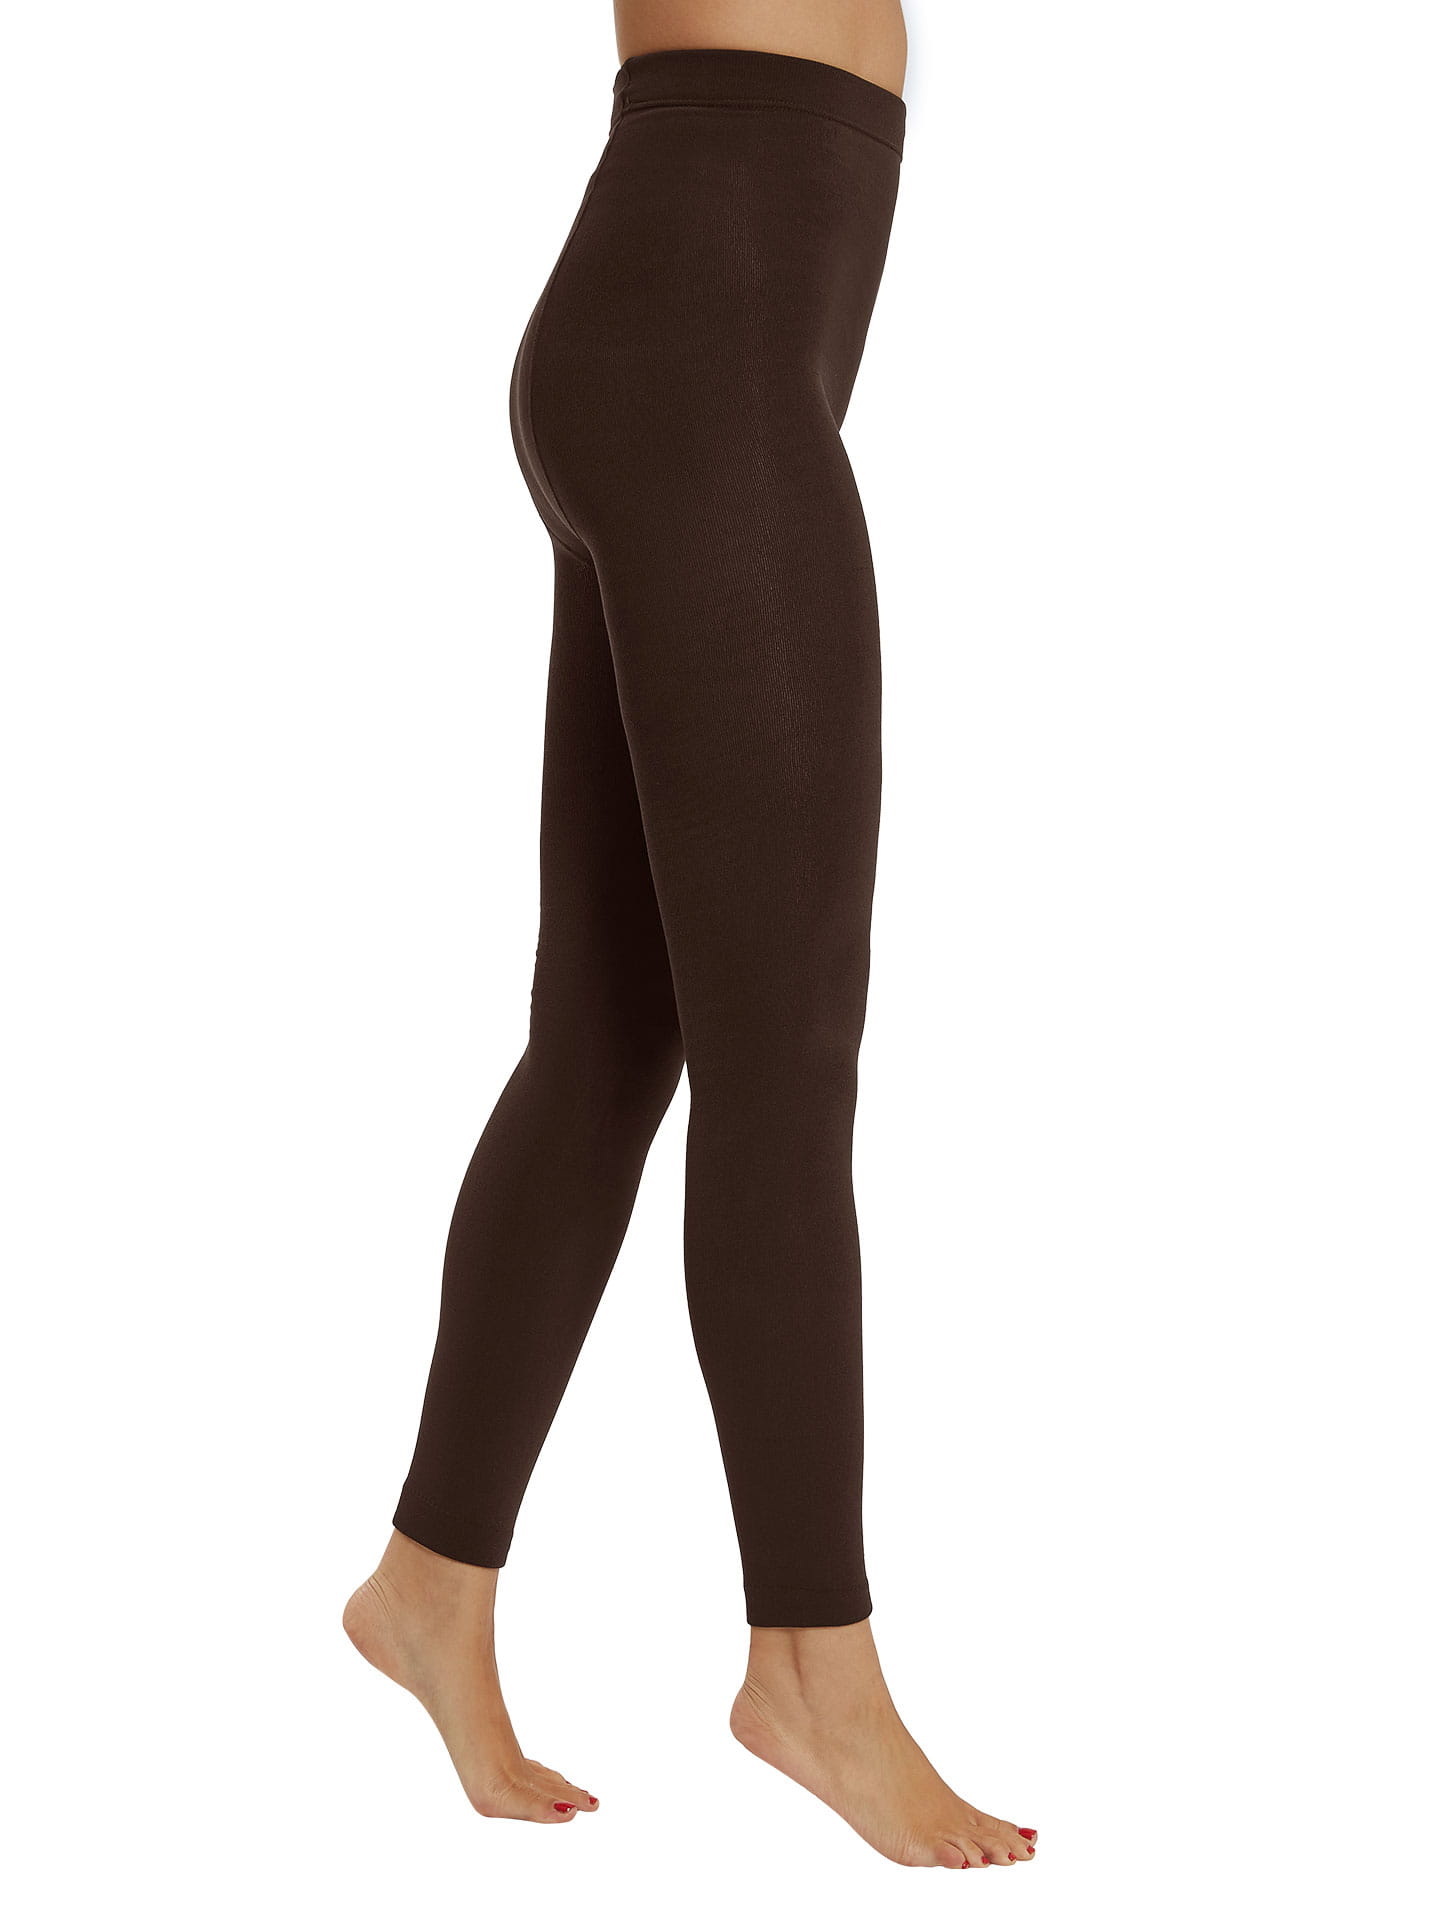 Thermal leggings 320den in dark brown, 4.99€